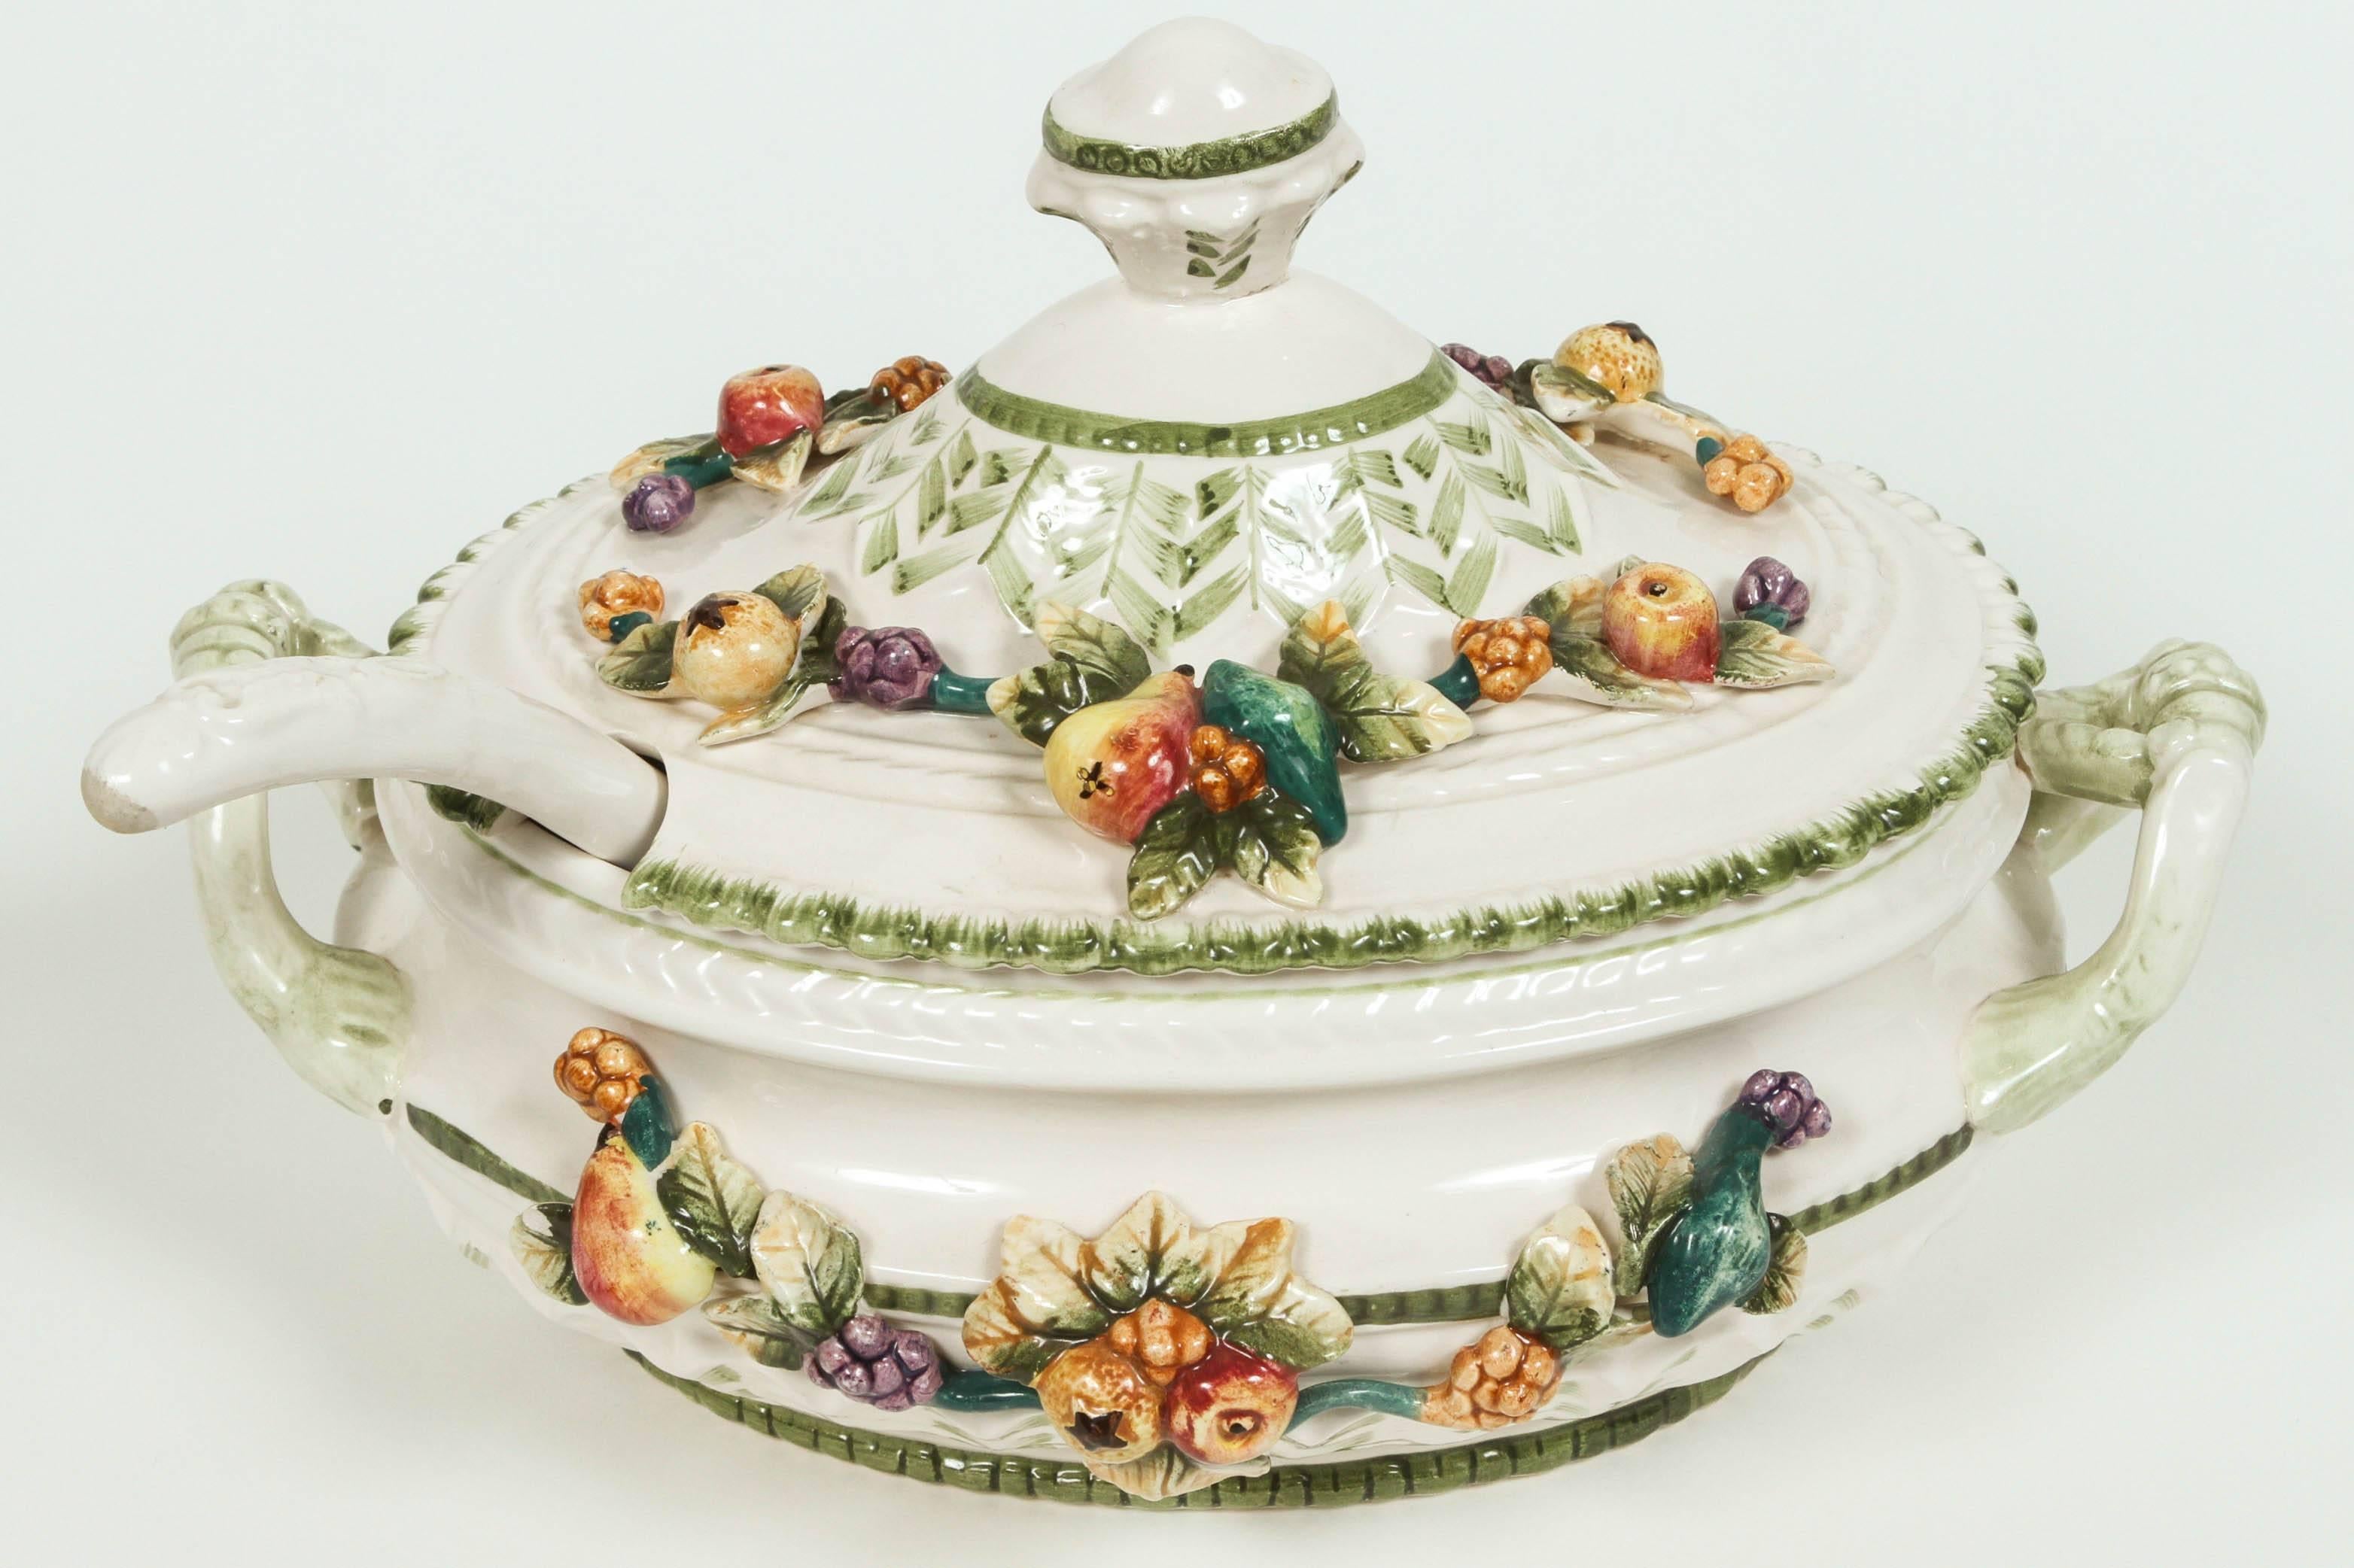 Ceramic Italian Tureen with Ladle and Tray